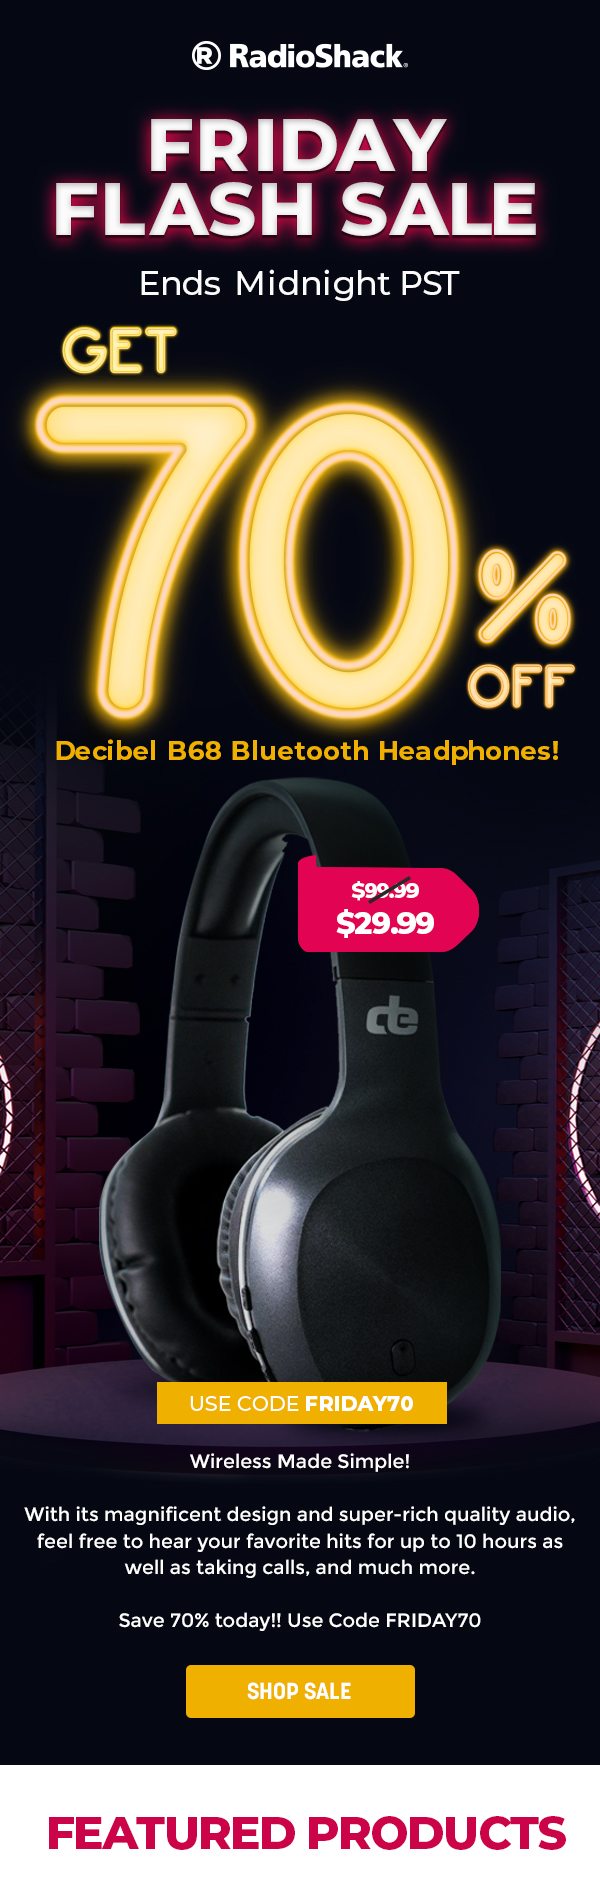 Friday Flash Sale - 70% OFF Decibel B68 Bluetooth Headphones